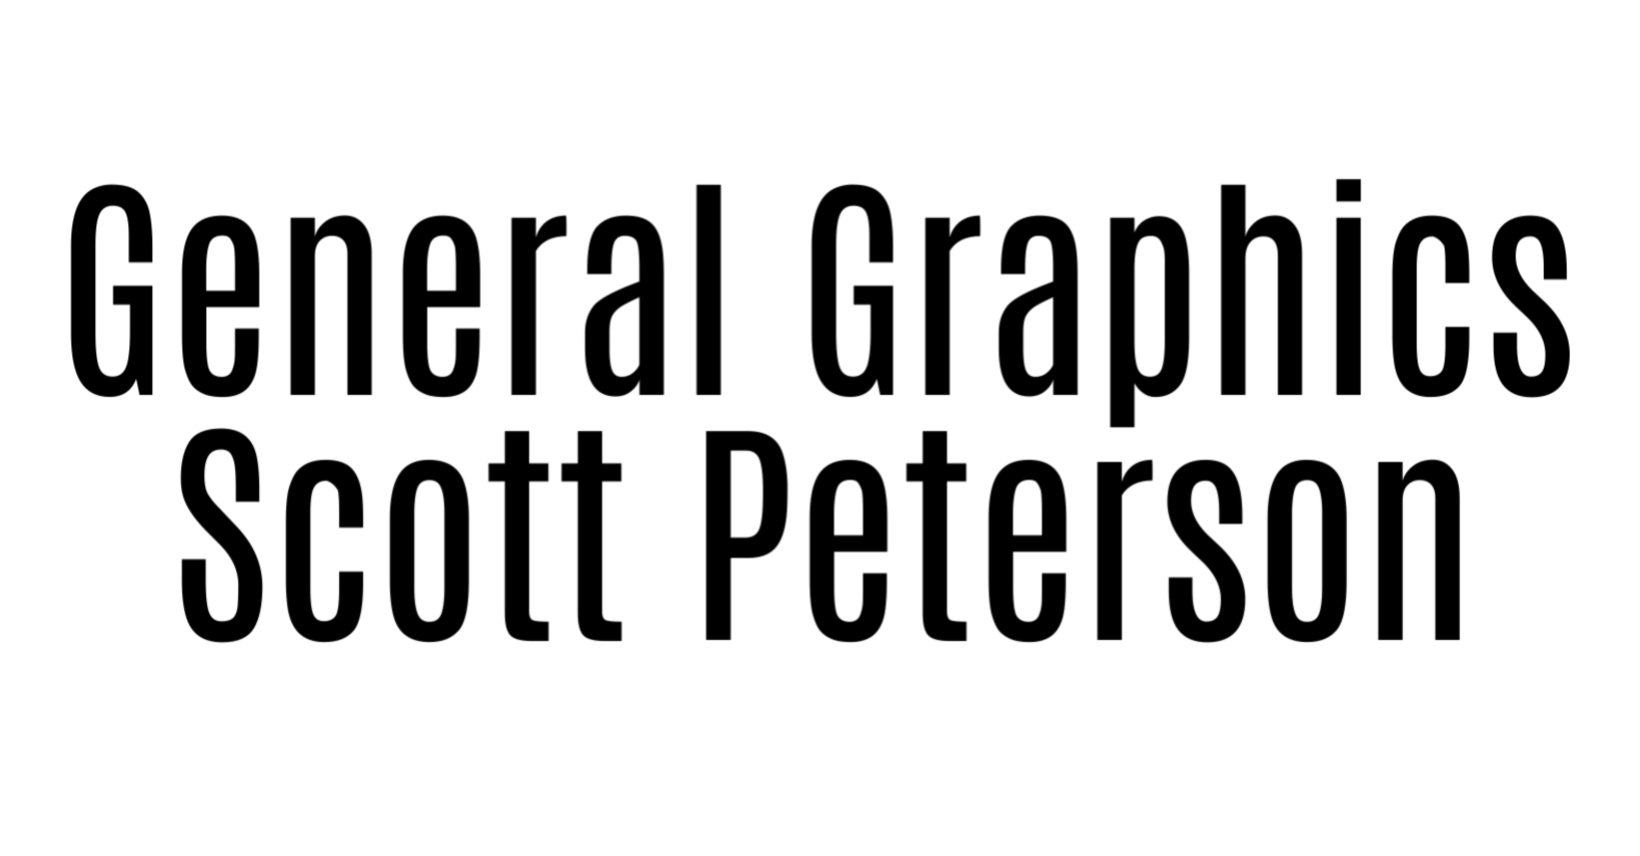 General Graphics-Scott Peterson